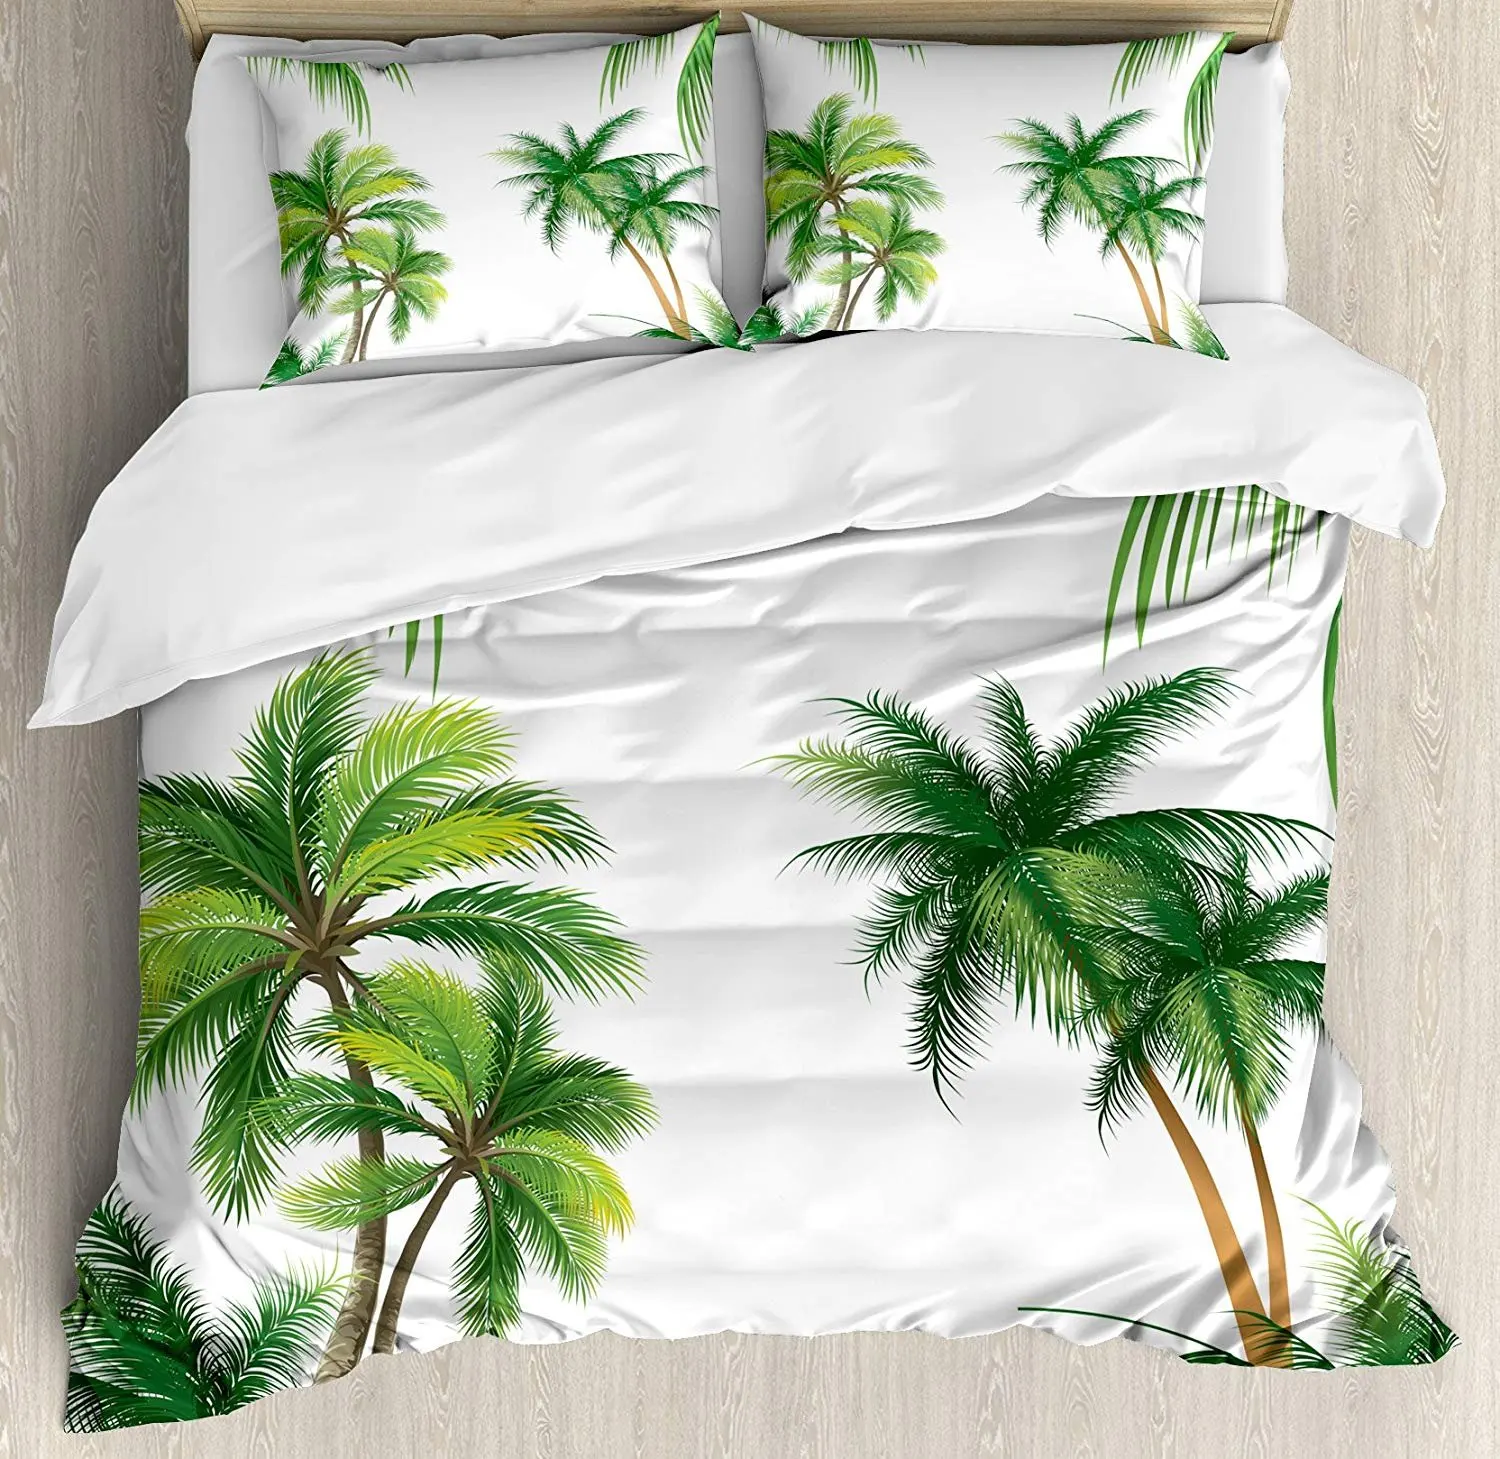 

Tropical Bedding Set Coconut Palm Tree Nature Paradise Plants Foliage Leaves Digital Illustration Duvet Cover Pillowcase Bed Set